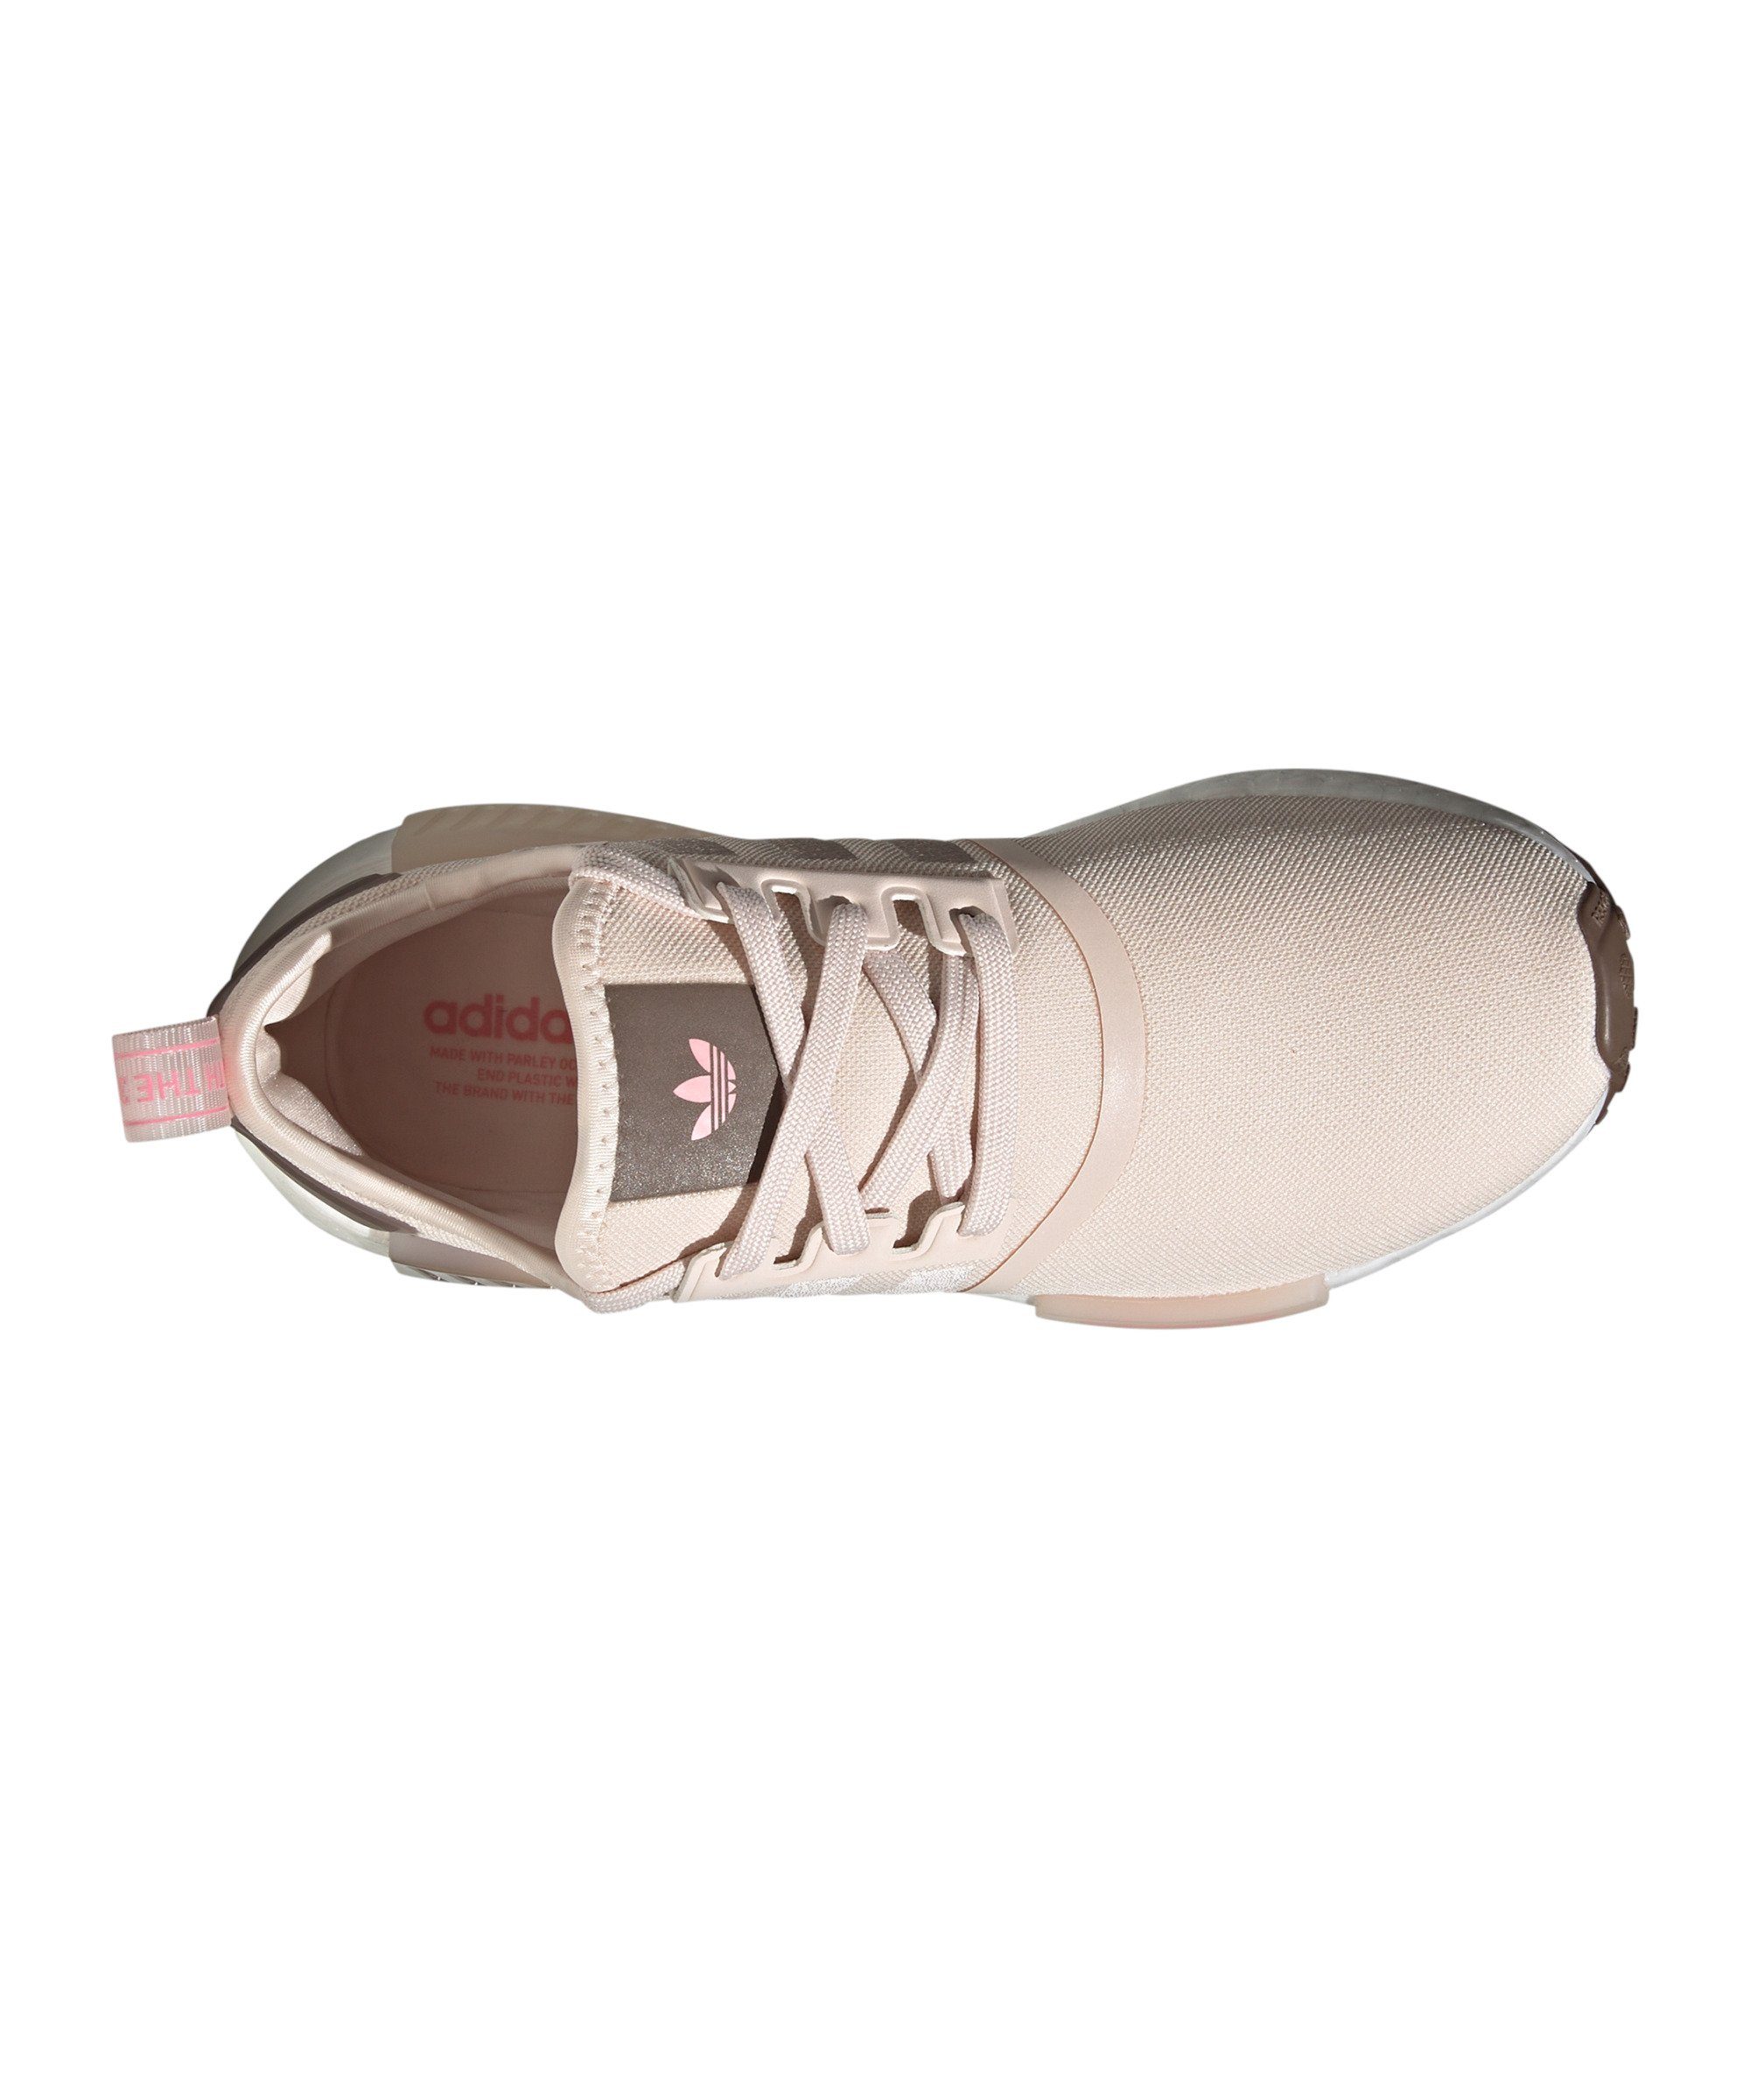 adidas beigebraunrosa NMD_R1 Damen Originals Sneaker